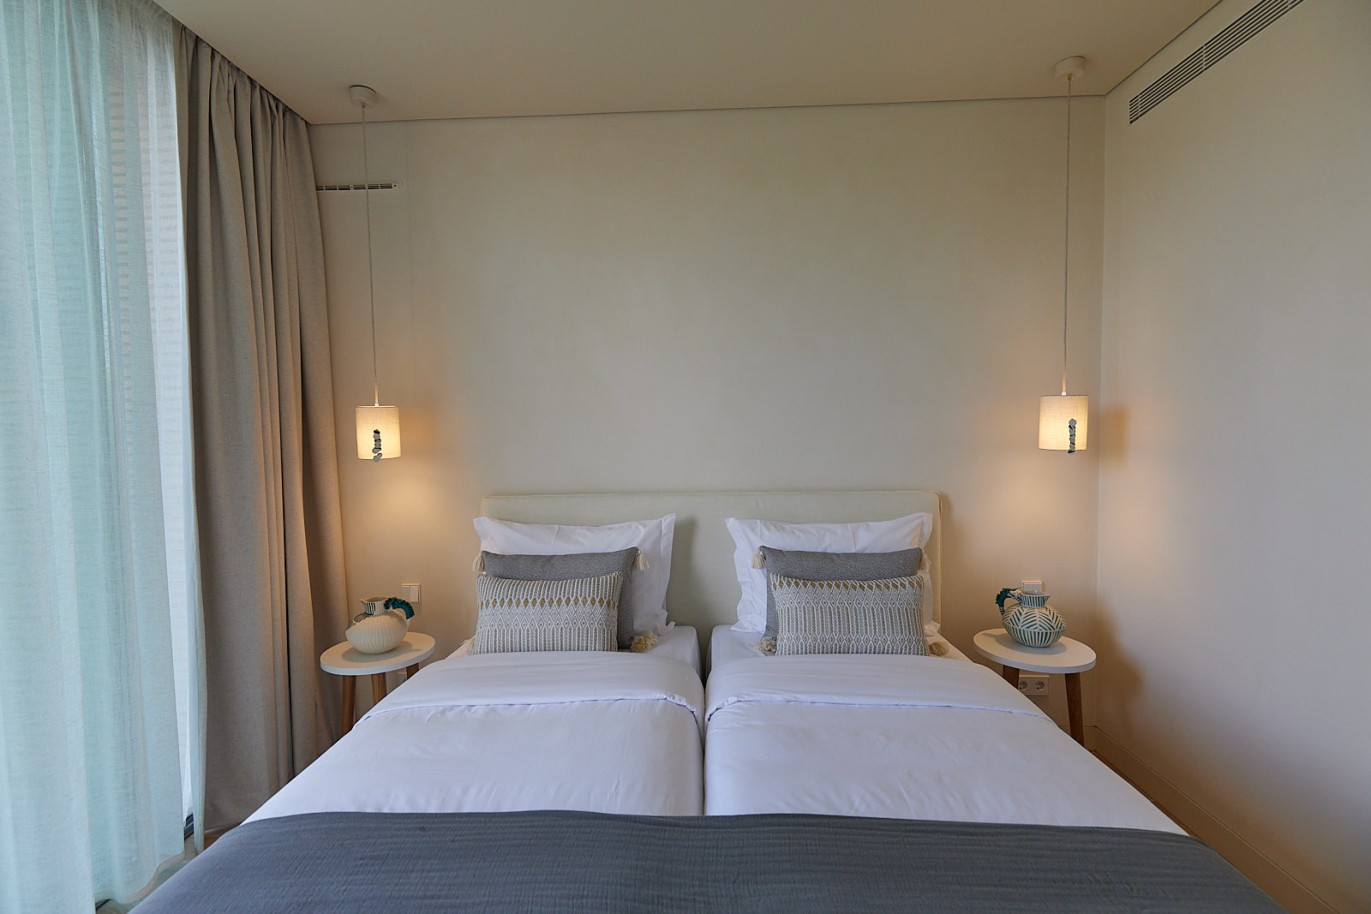 2 bedroom apartment in resort, for sale in Porches, Algarve_229078